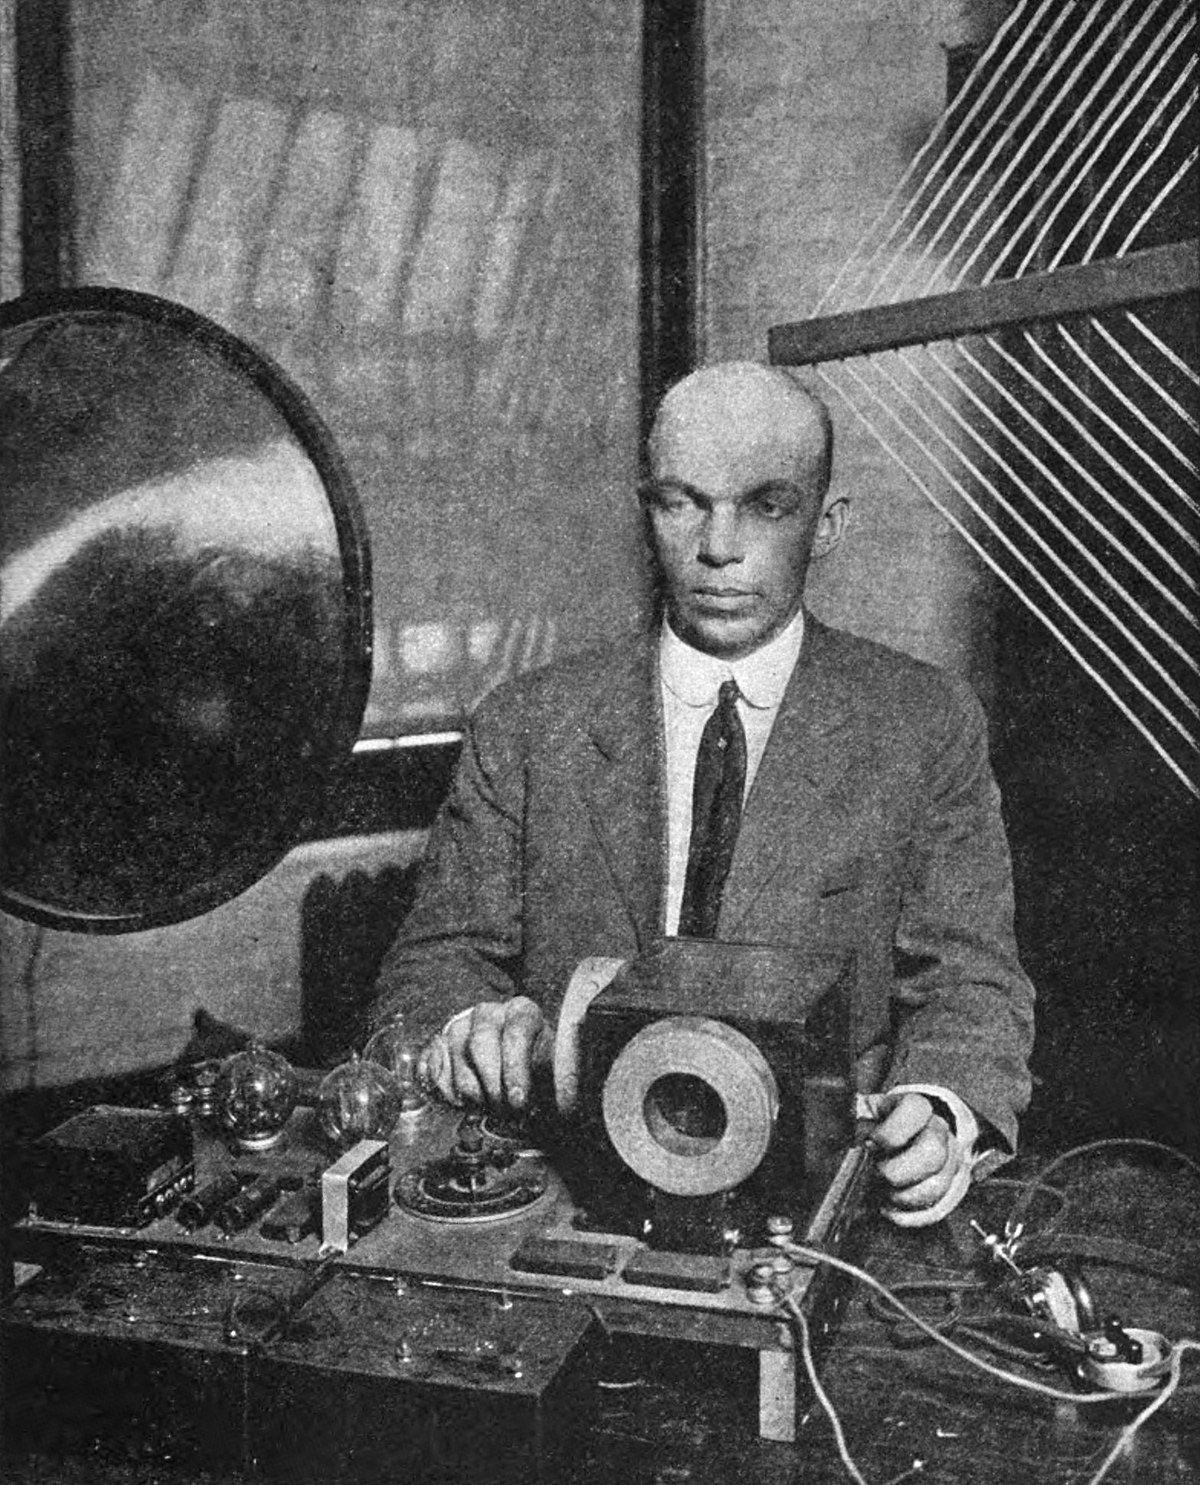 Edwin Armstrong presenting the super-regenerative receiver in June 1922. Source: Wikipedia